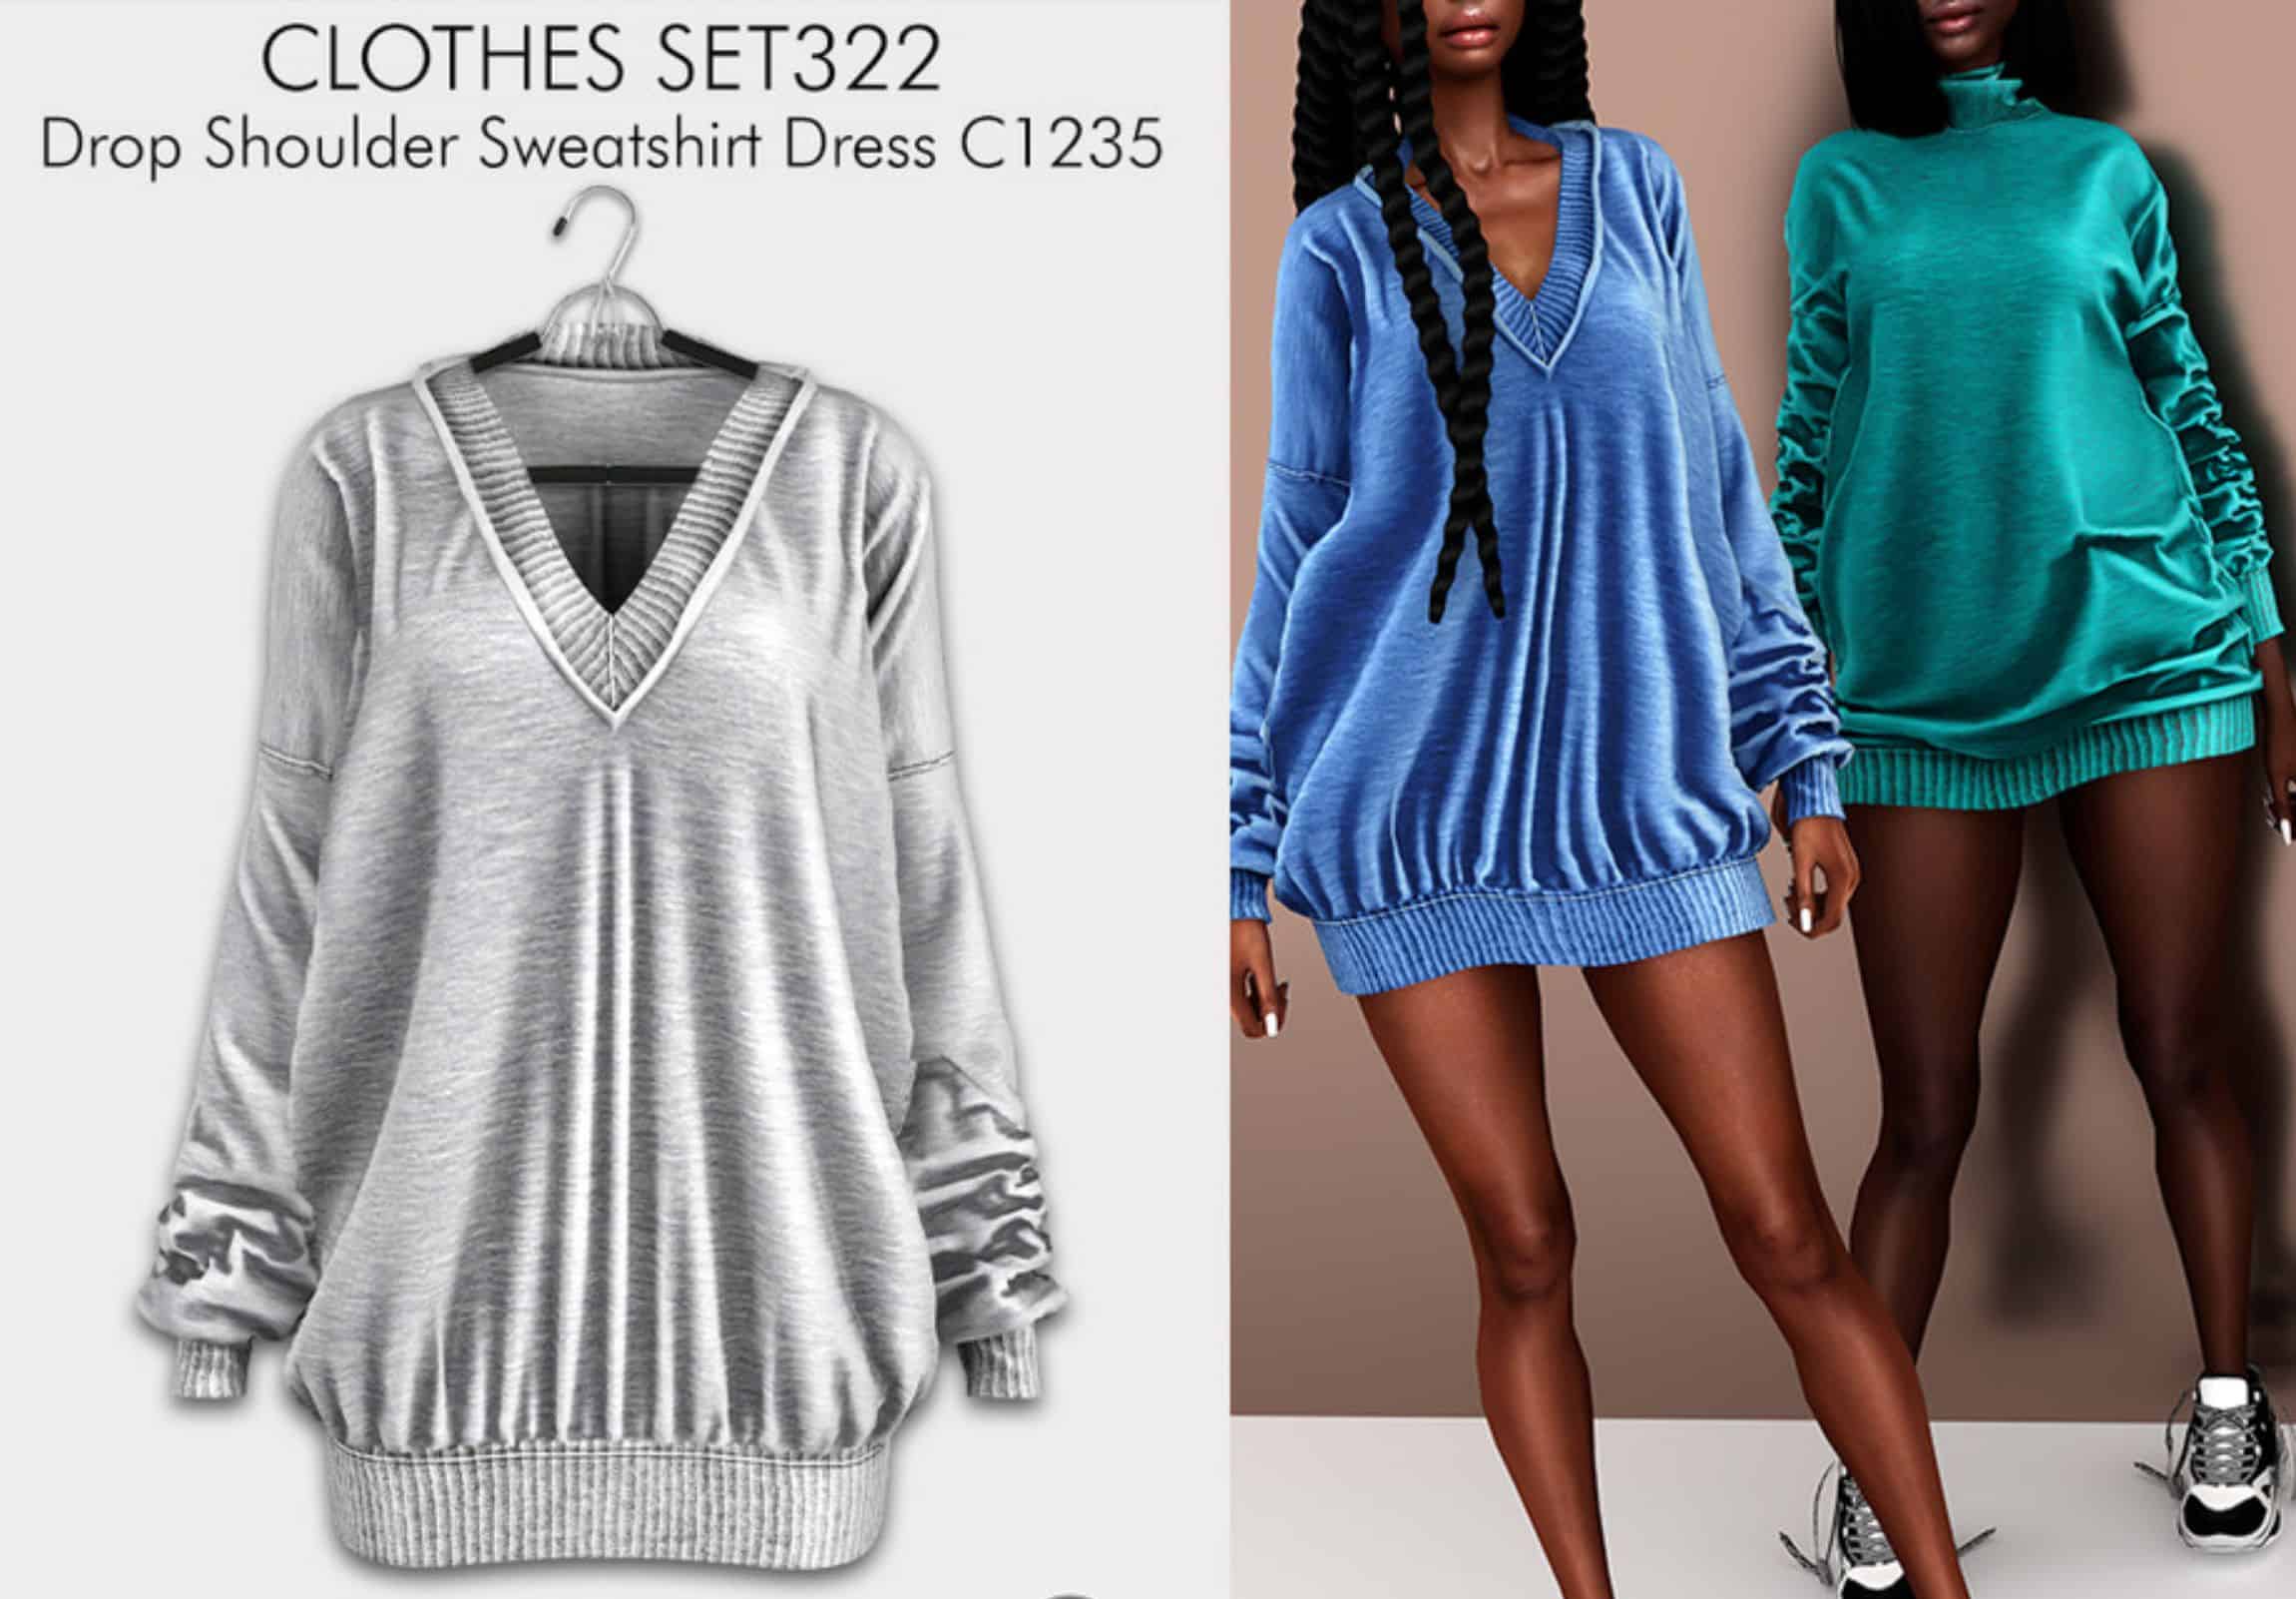 Drop Shoulder Sweatshirt Dress - Sims 4 Mod Download Free